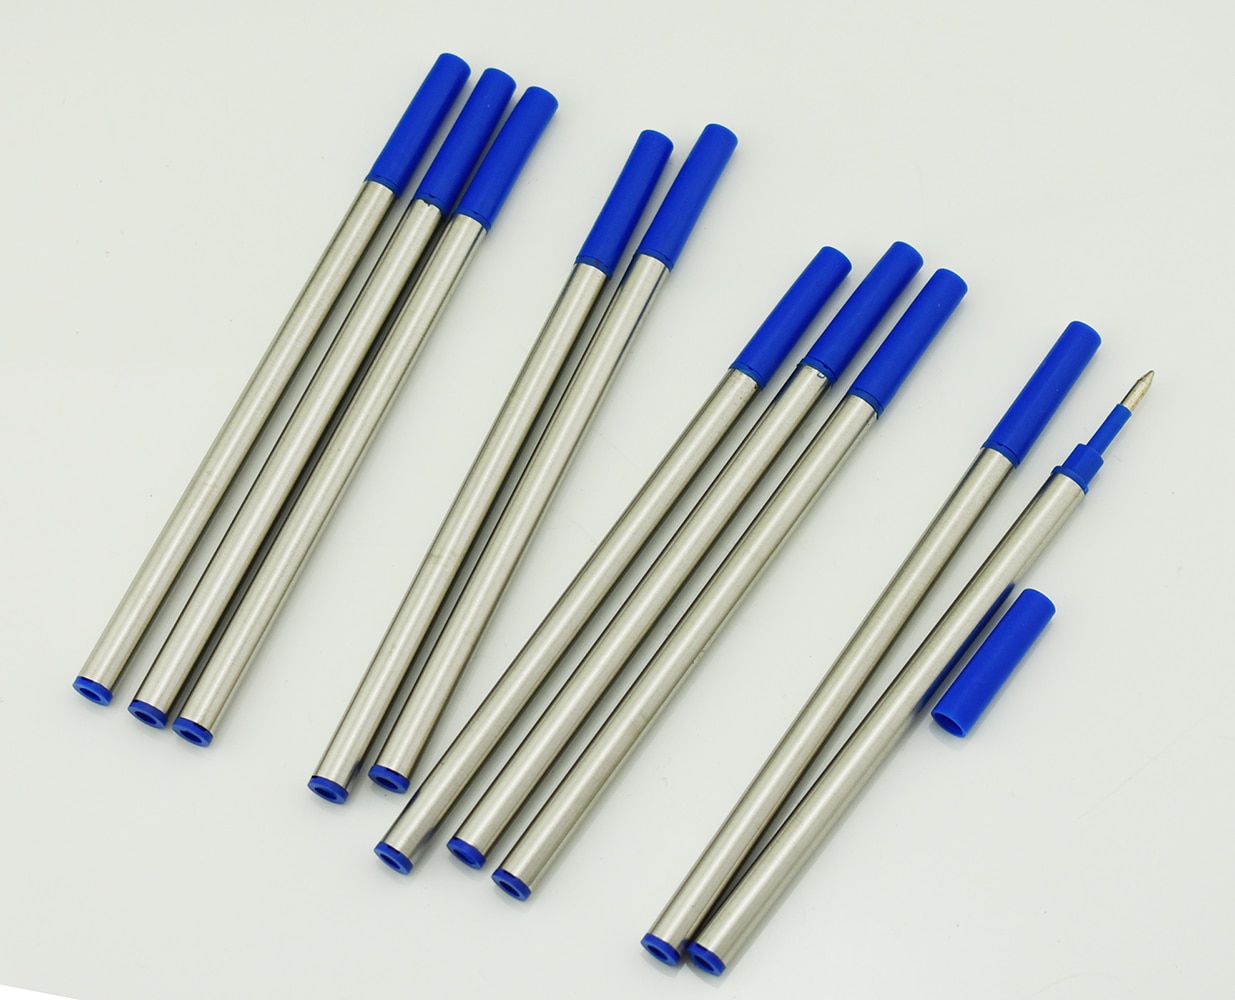 10 stuks Baoer Rollerball Pen Inkt Vullingen voor BAOER, FULIWEN, JINHAO, DUKE Rollerball Pennen, push Type 0.5mm-Blauwe Kleur